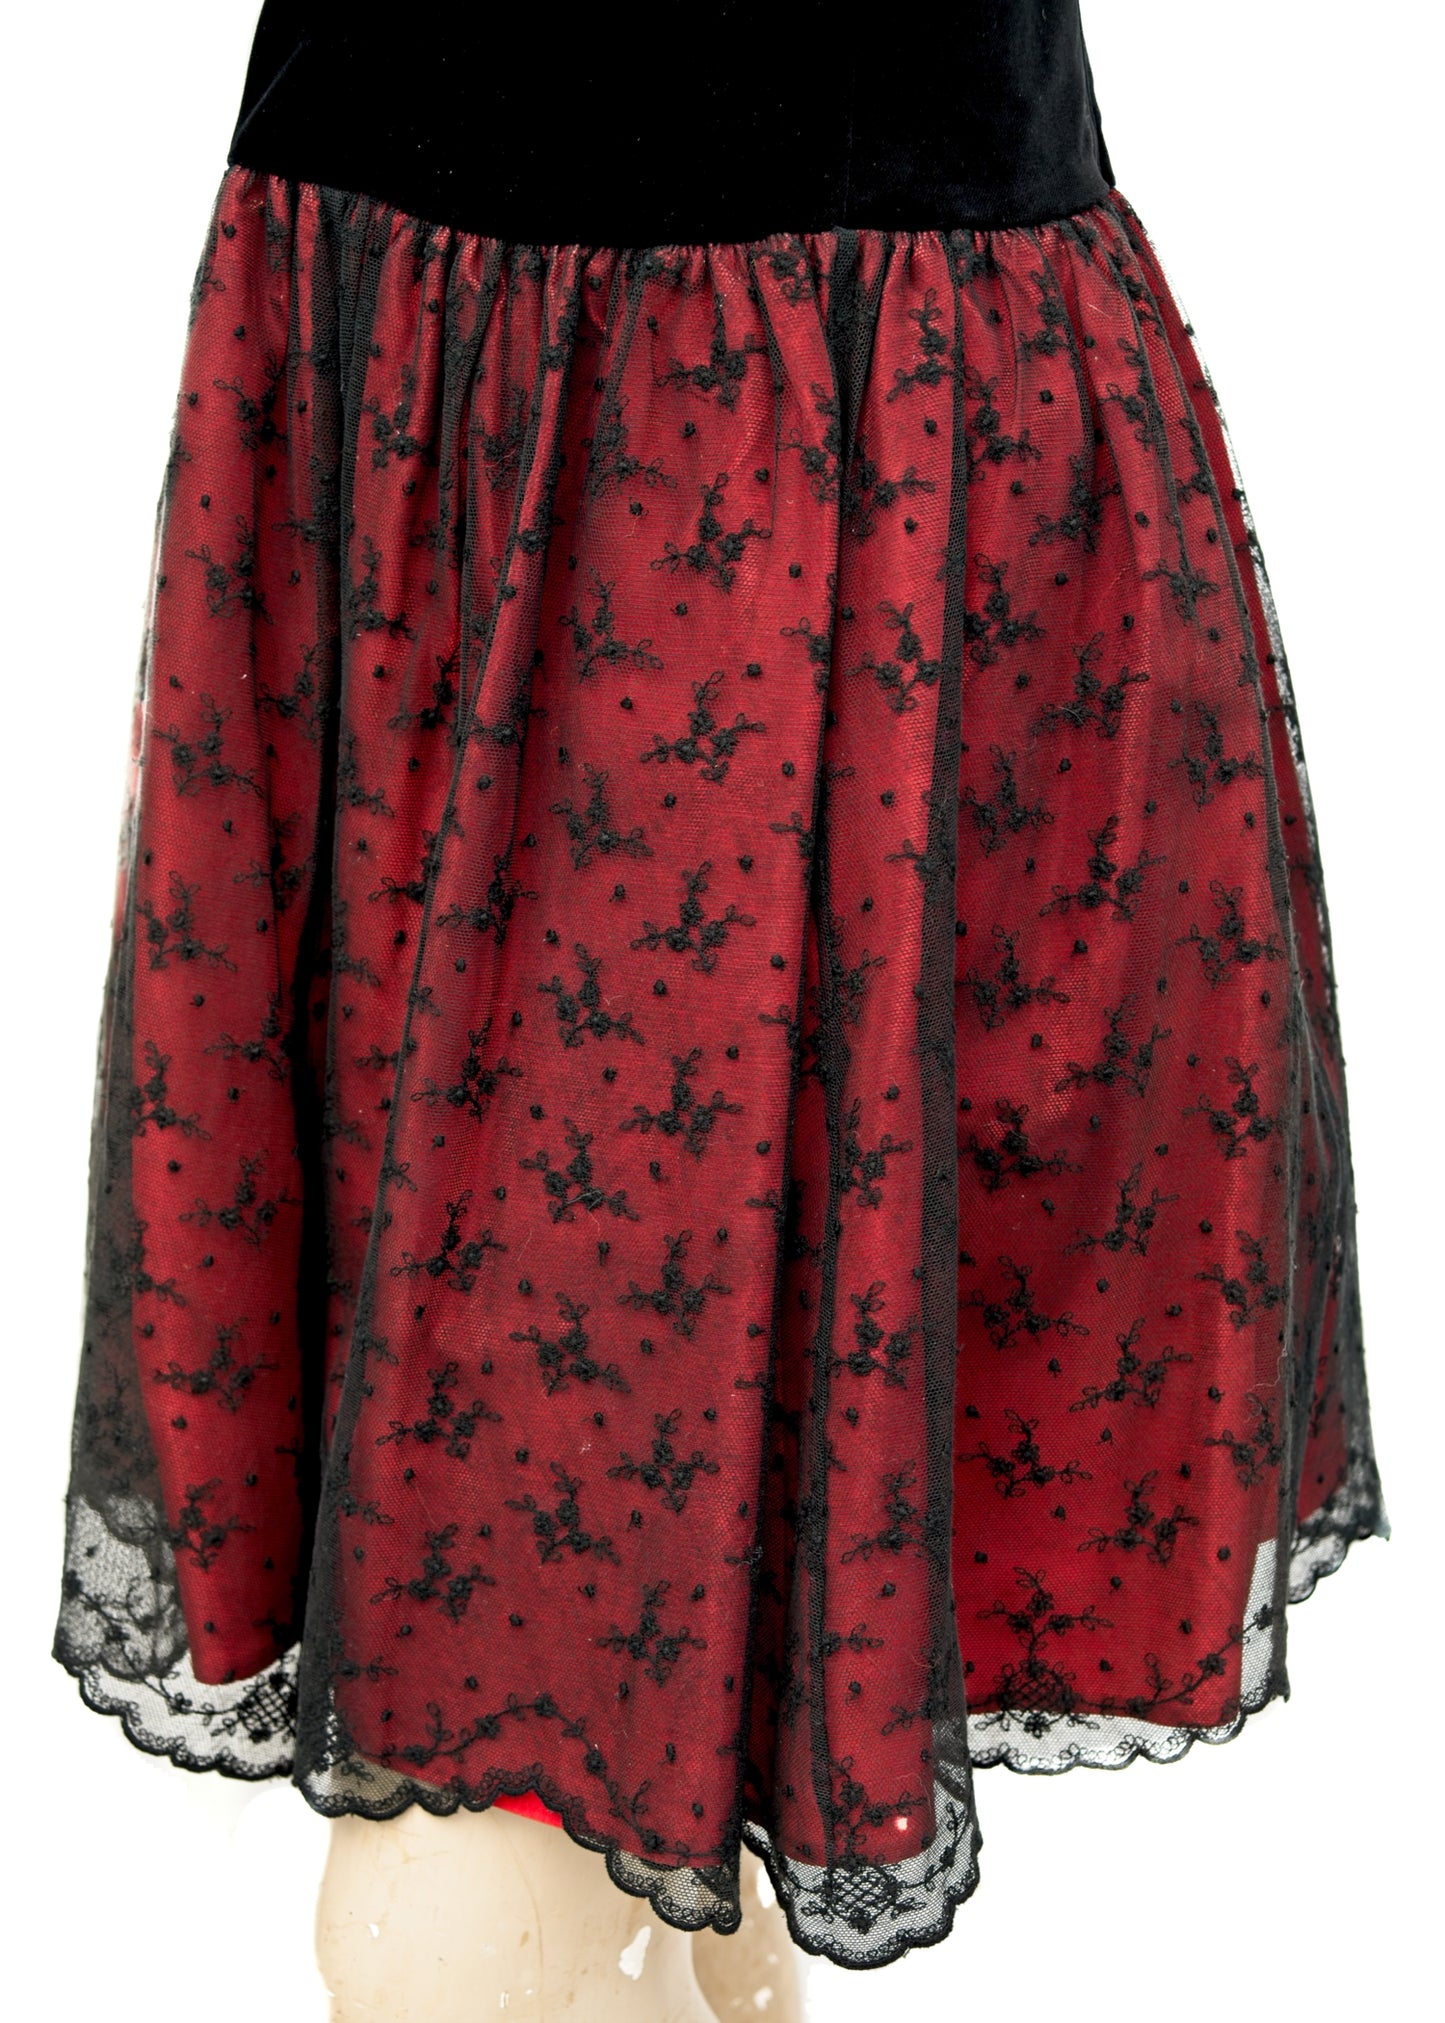 Vintage Laura Ashley Black and Red Strapless Cocktail Dress • Velvet Lace • UK12